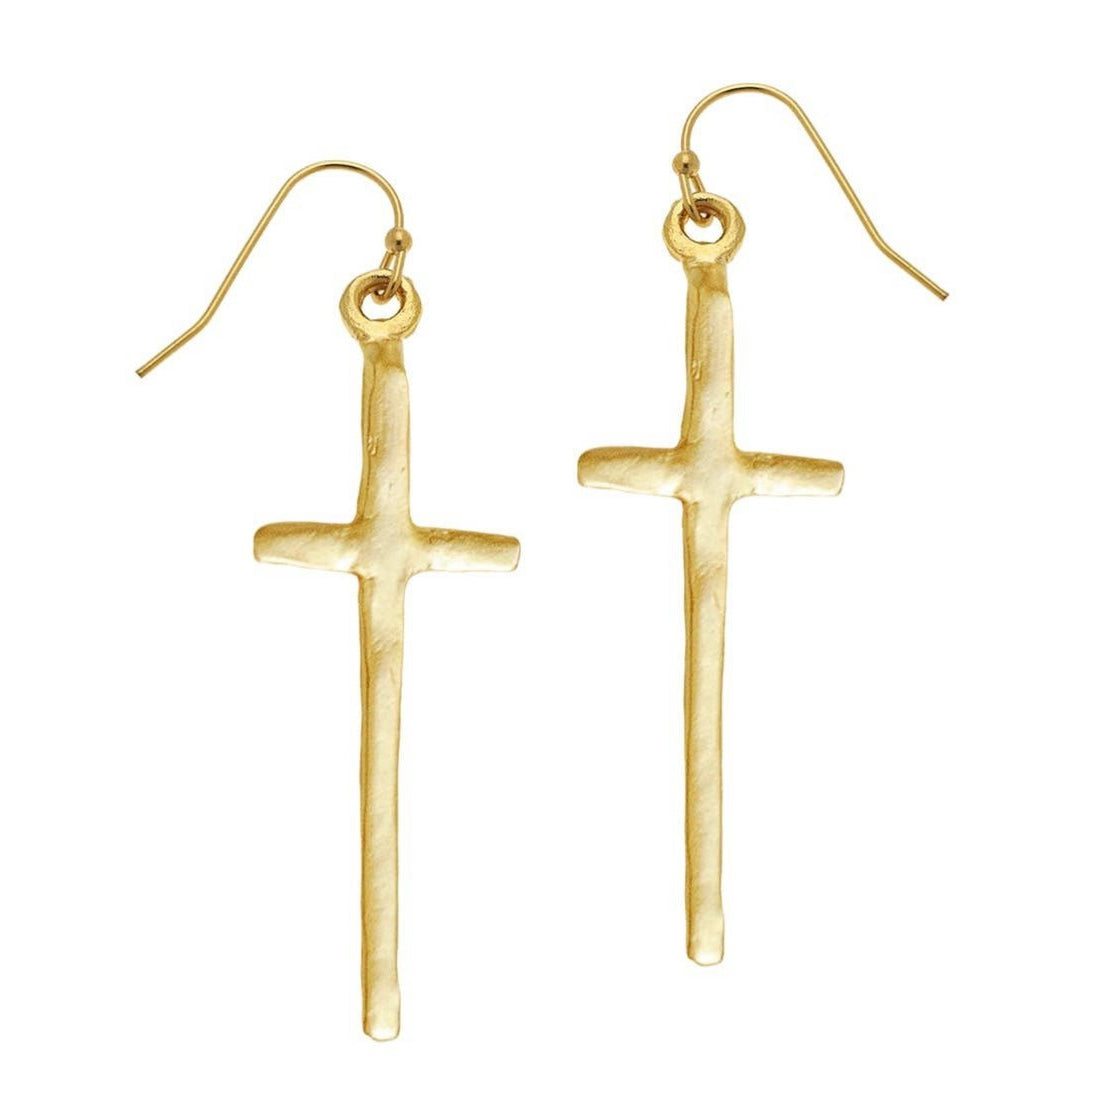 Susan Shaw Tall Cross Earrings - Gold